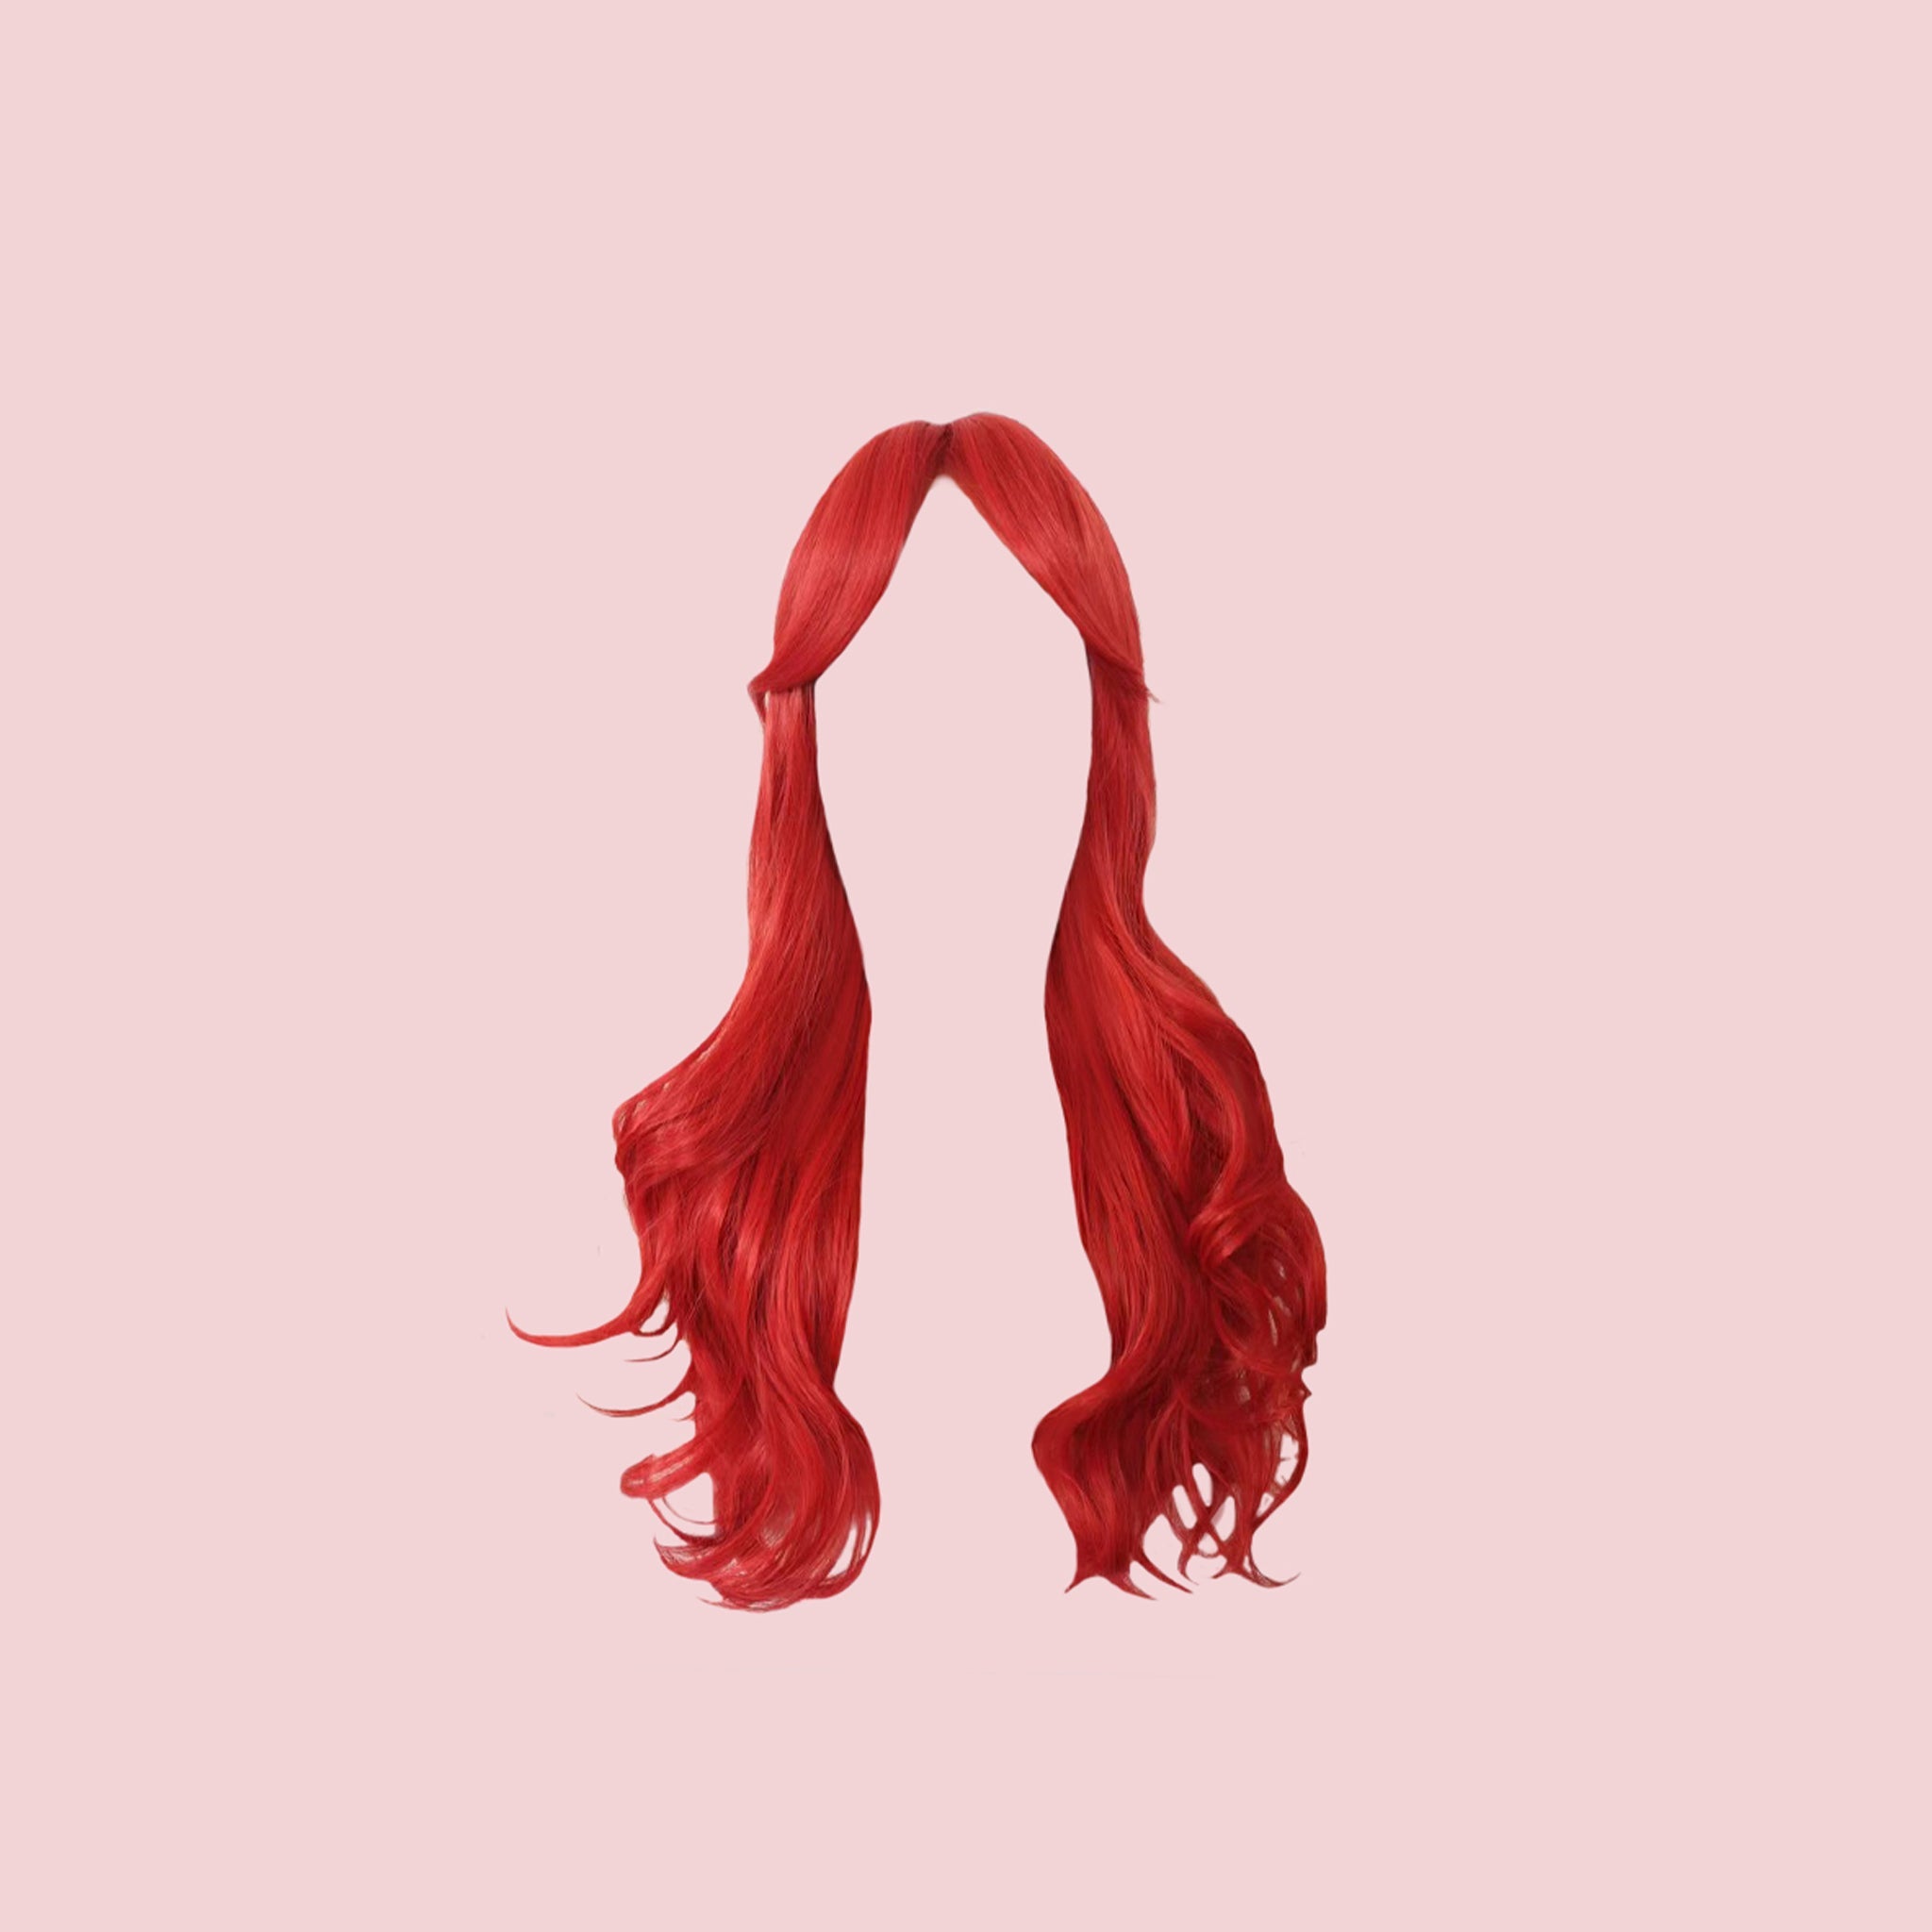 Rødhåret x